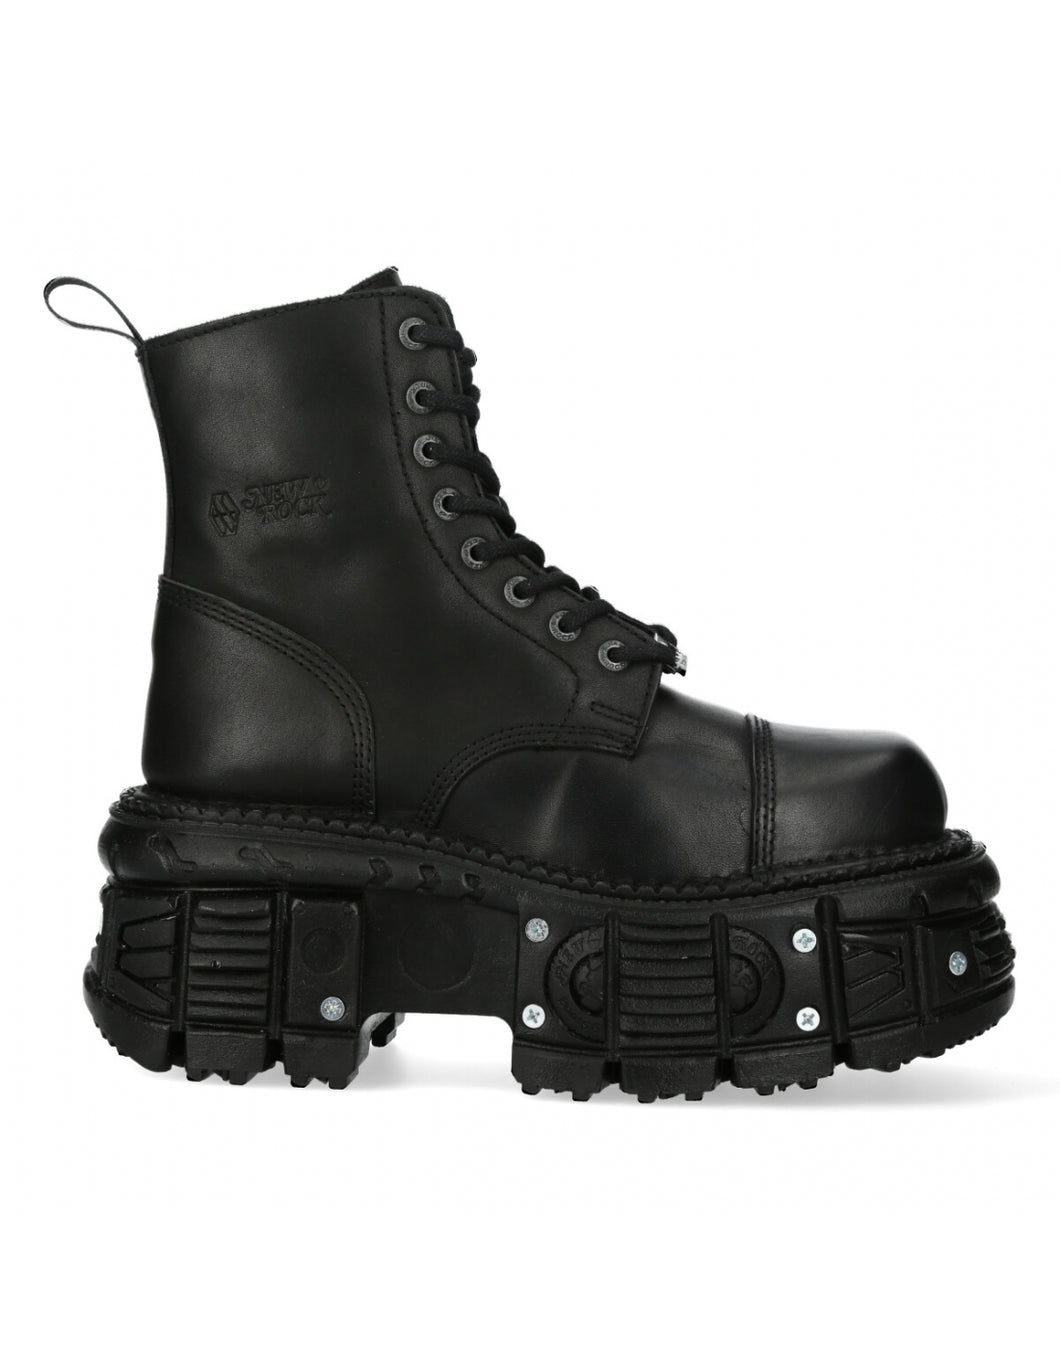 New Rock Shoes Boots Stiefel TANK083-C1 Gothic Tank Collection Black Echtleder